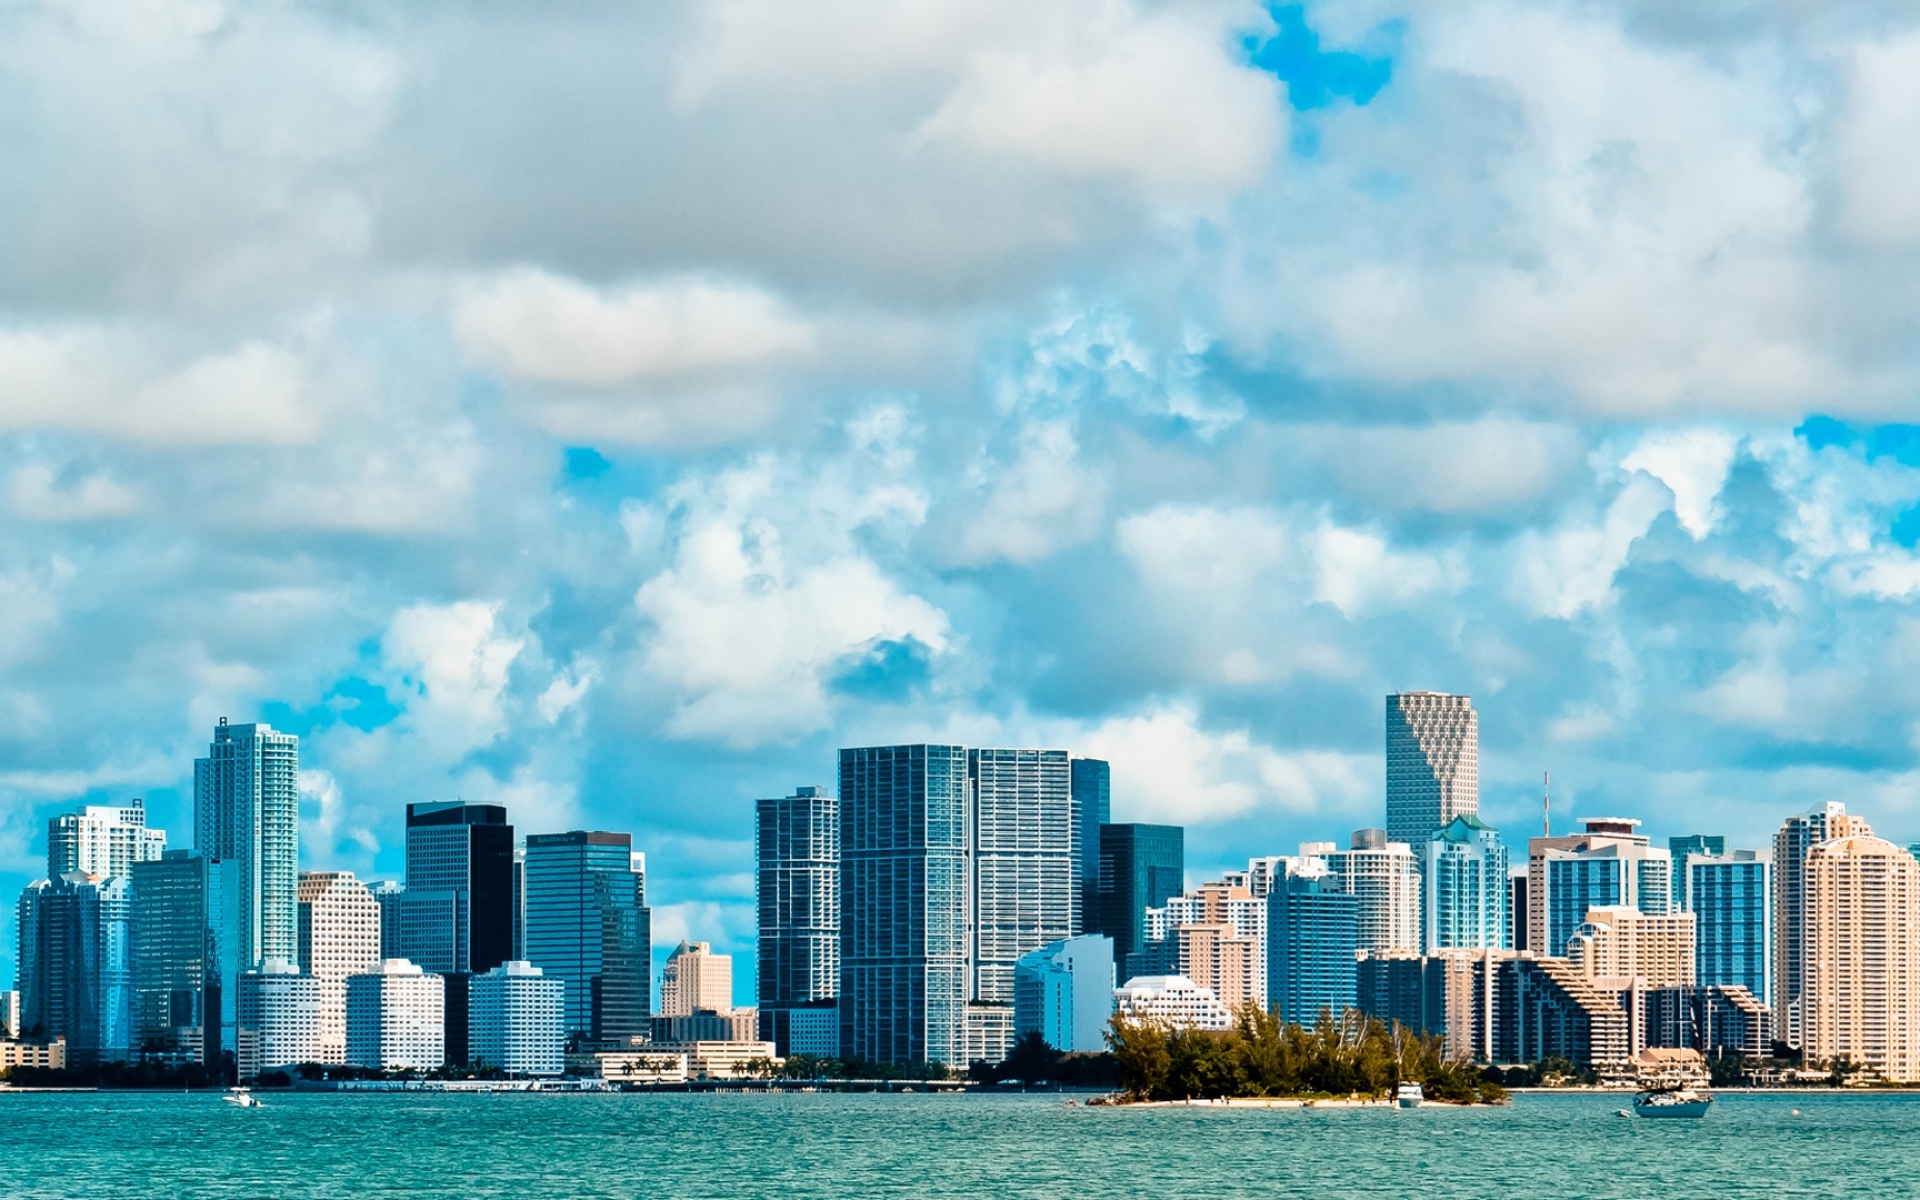 Картинки Майами, США, америка, пляж миами, небо, облака, здания, квартиры, флорида фото и обои на рабочий стол